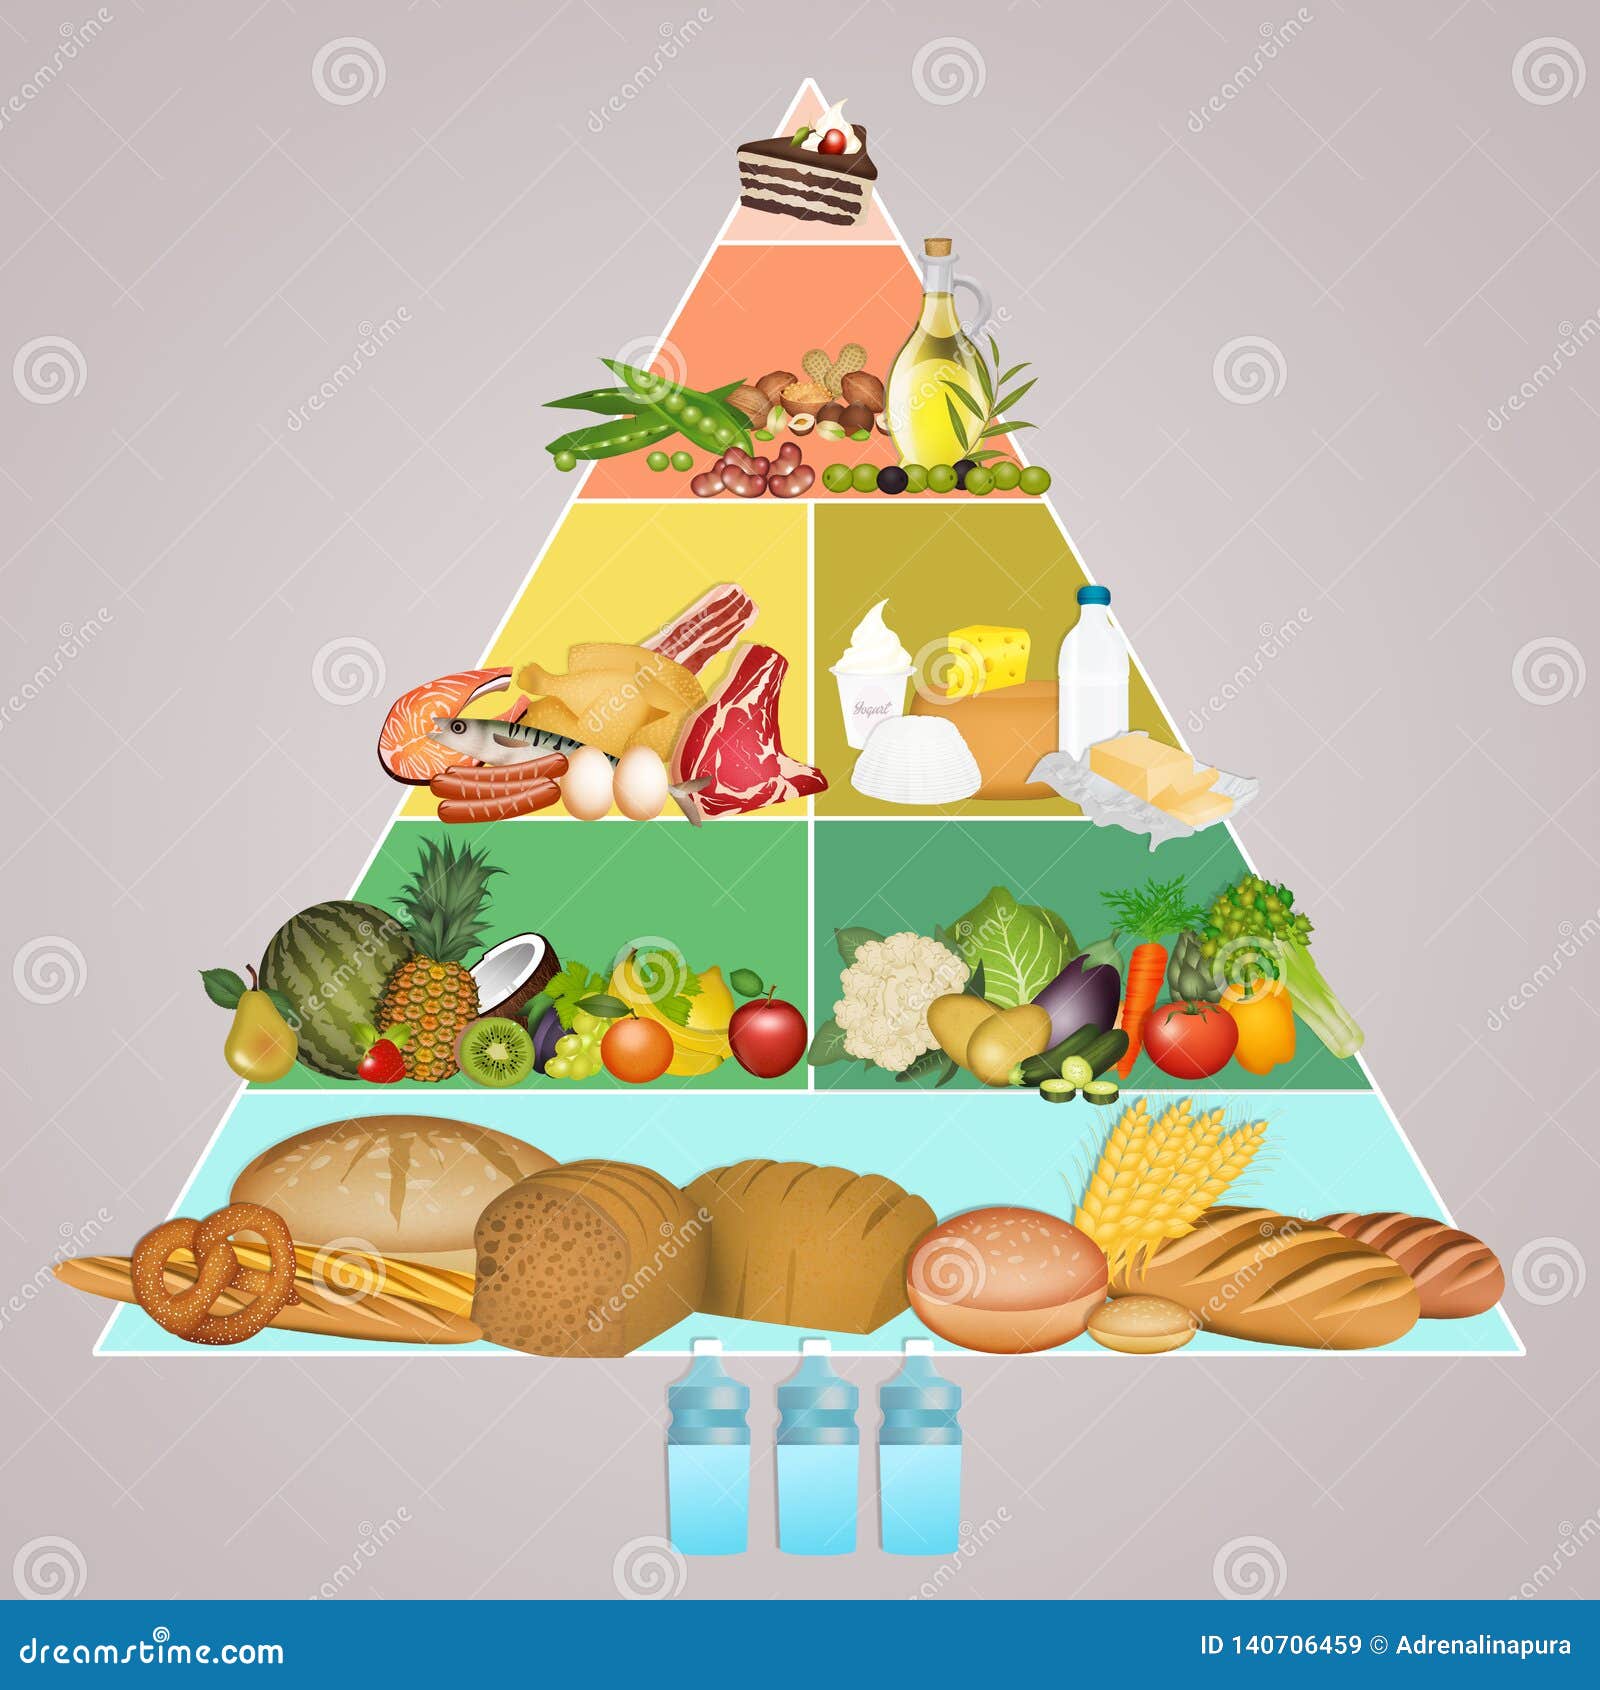 The food pyramid stock illustration. Illustration of dried - 140706459